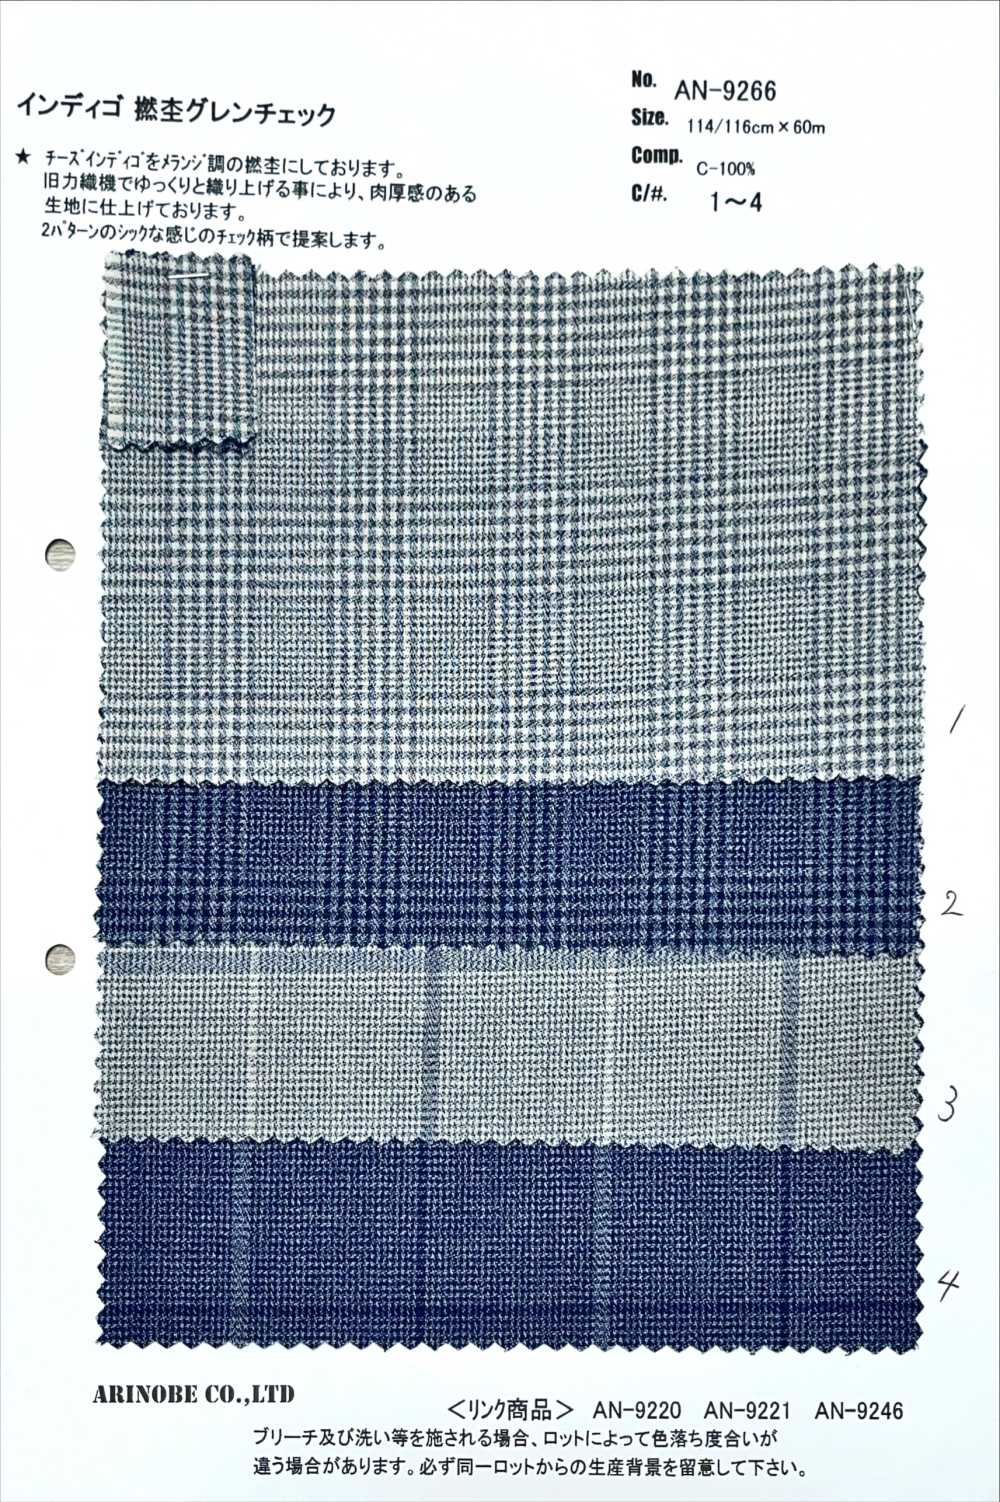 AN-9266 Indigo Twisted Heather Glen Check[Textile / Fabric] ARINOBE CO., LTD.